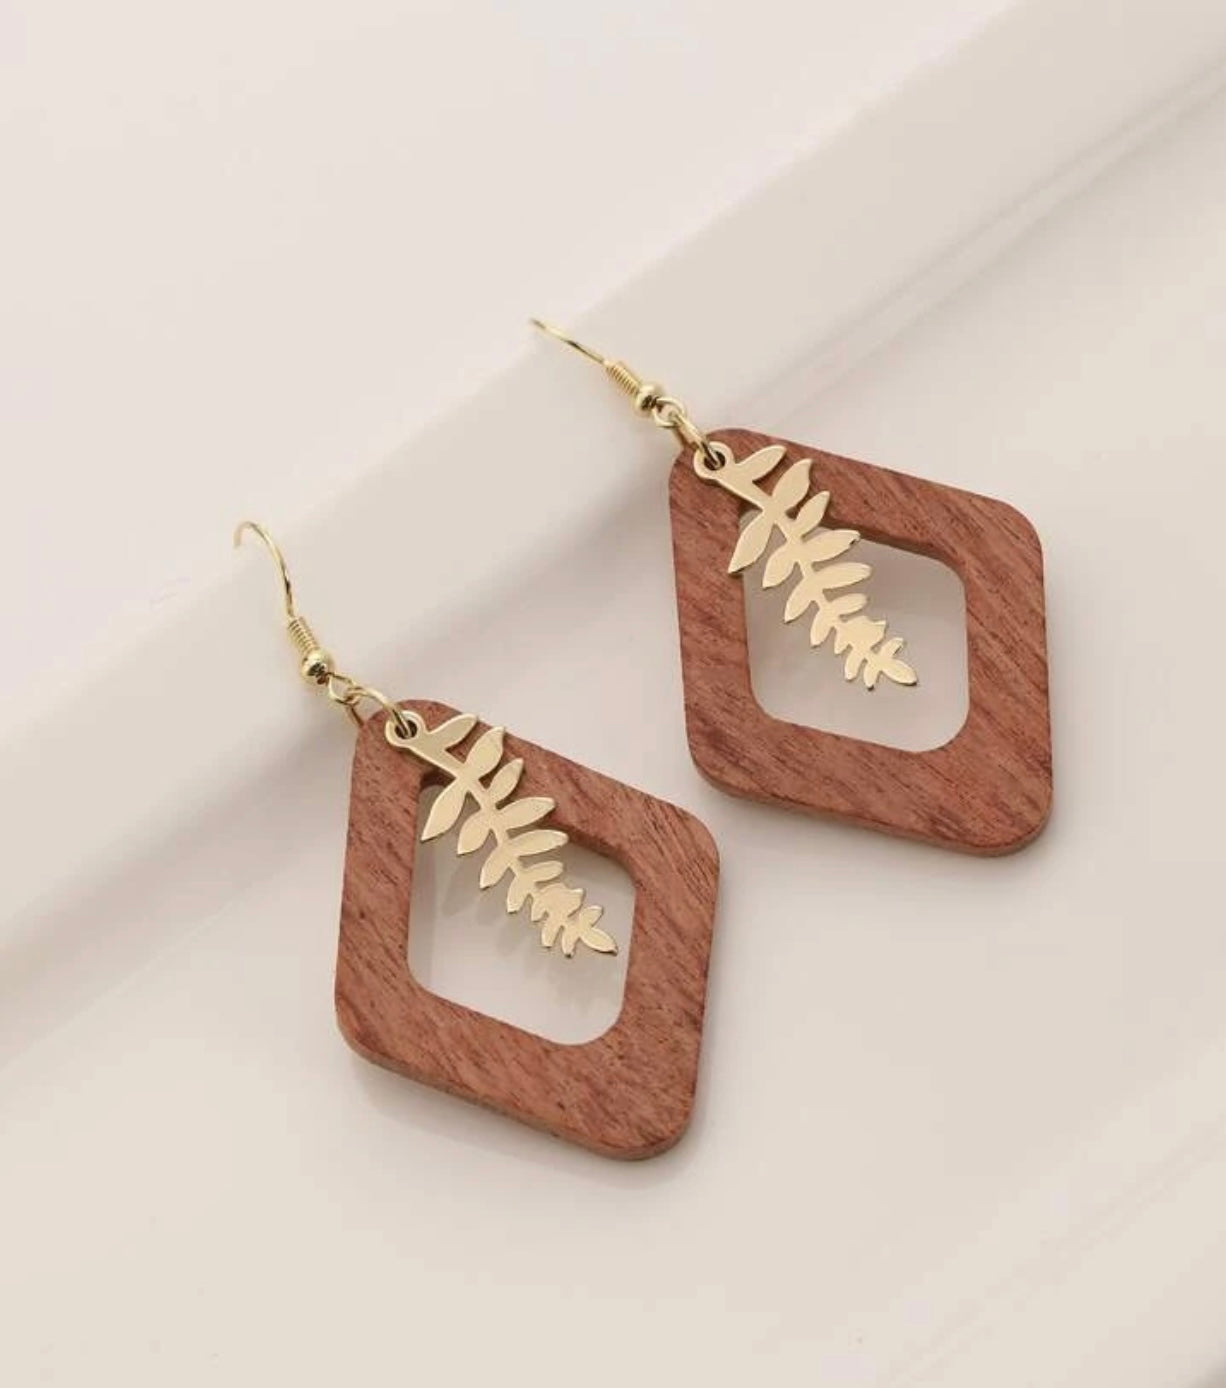 Beautiful Wood and Gold Leaf Earrings